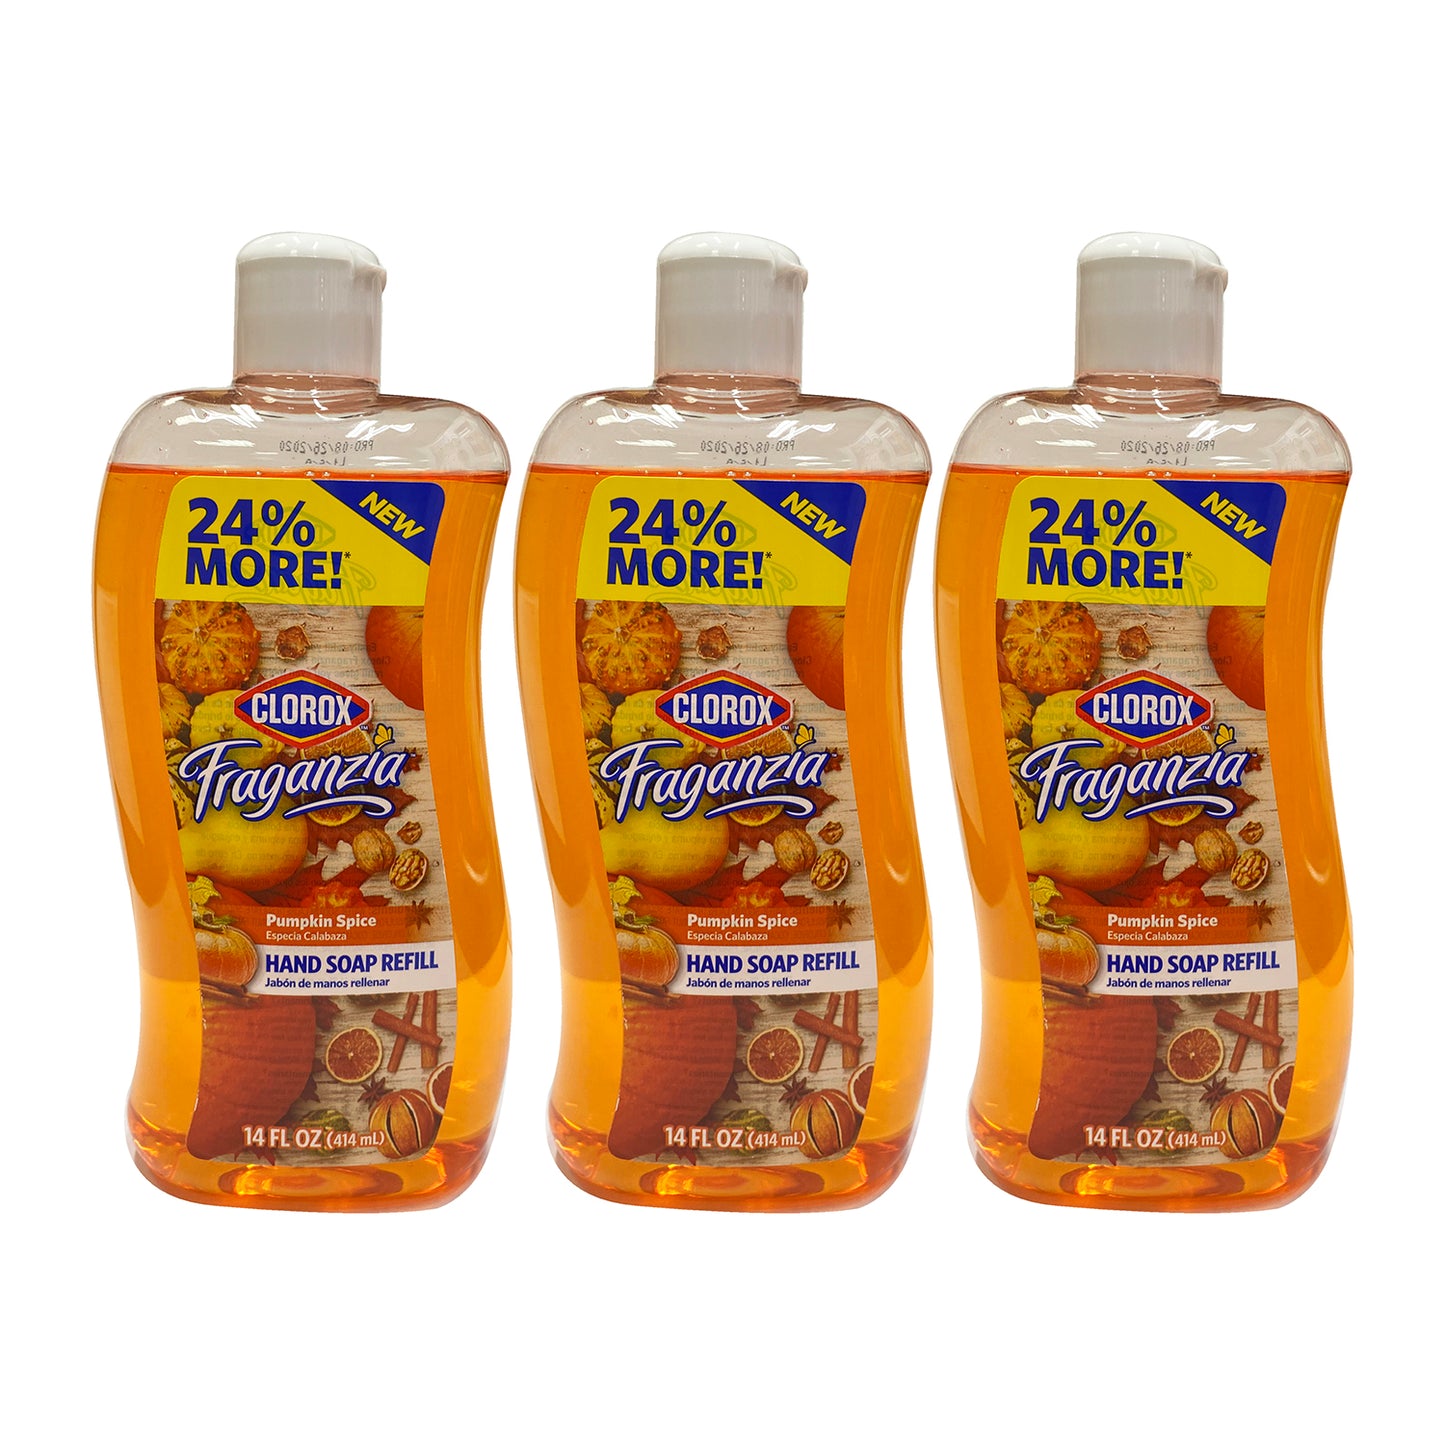 Clorox Fraganzia Pumpkin Spice Hand Soap 14 oz "3-PACK"